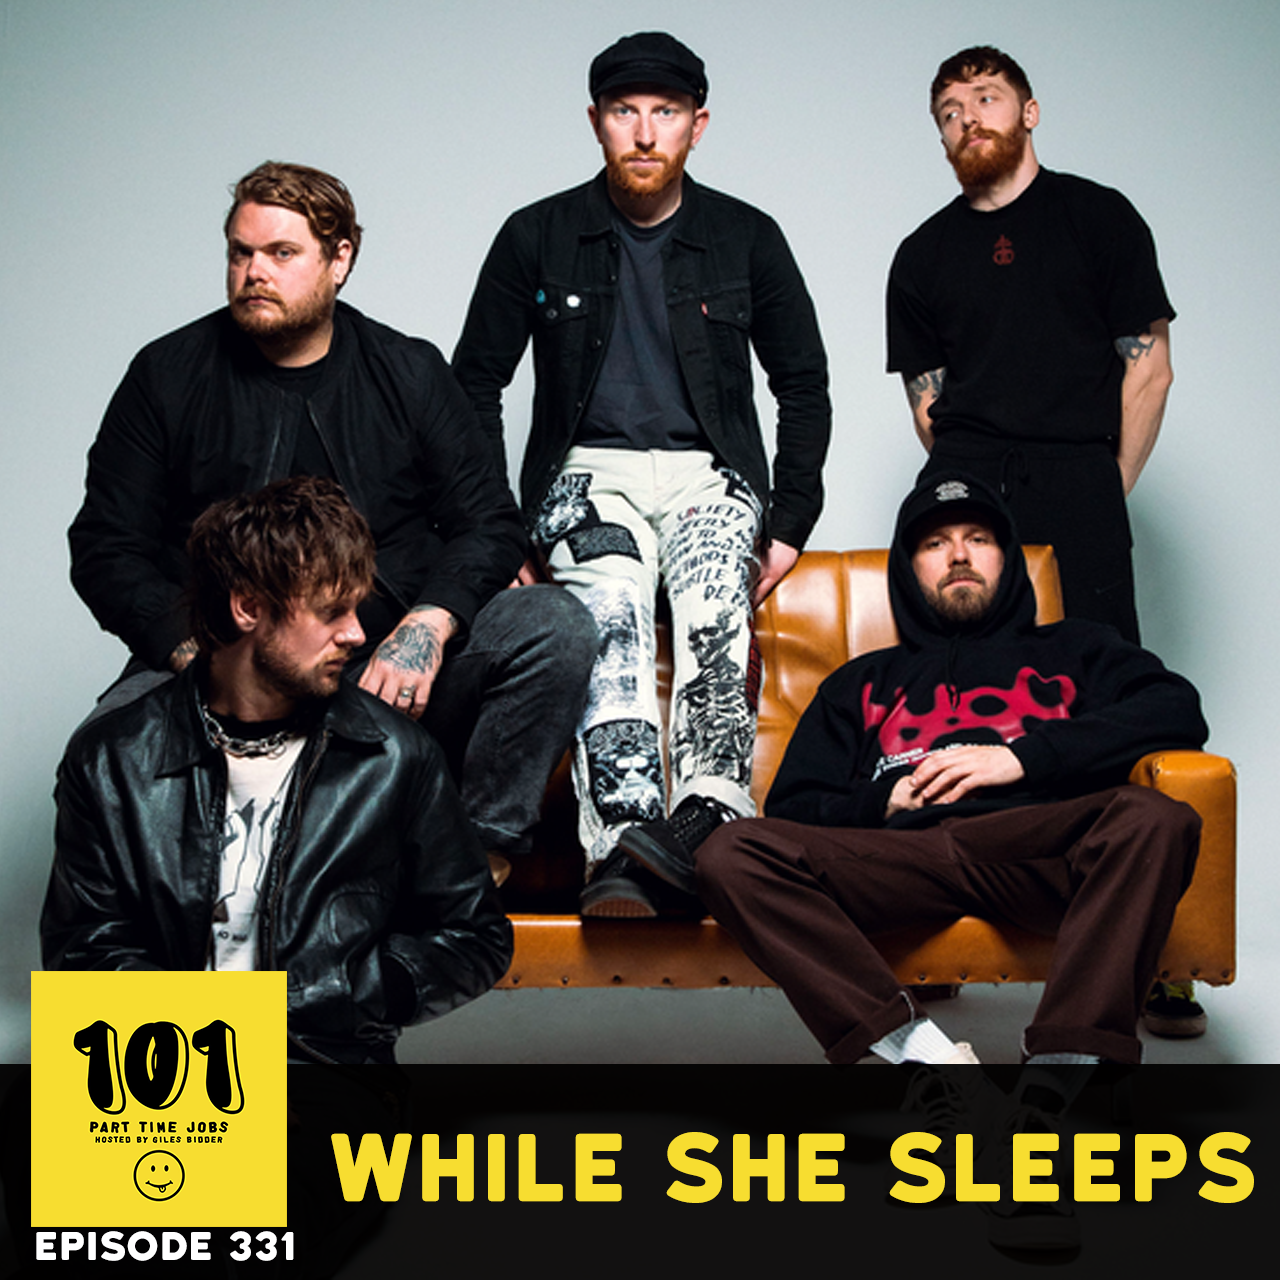 Episode While She Sleeps - The DIY arena band